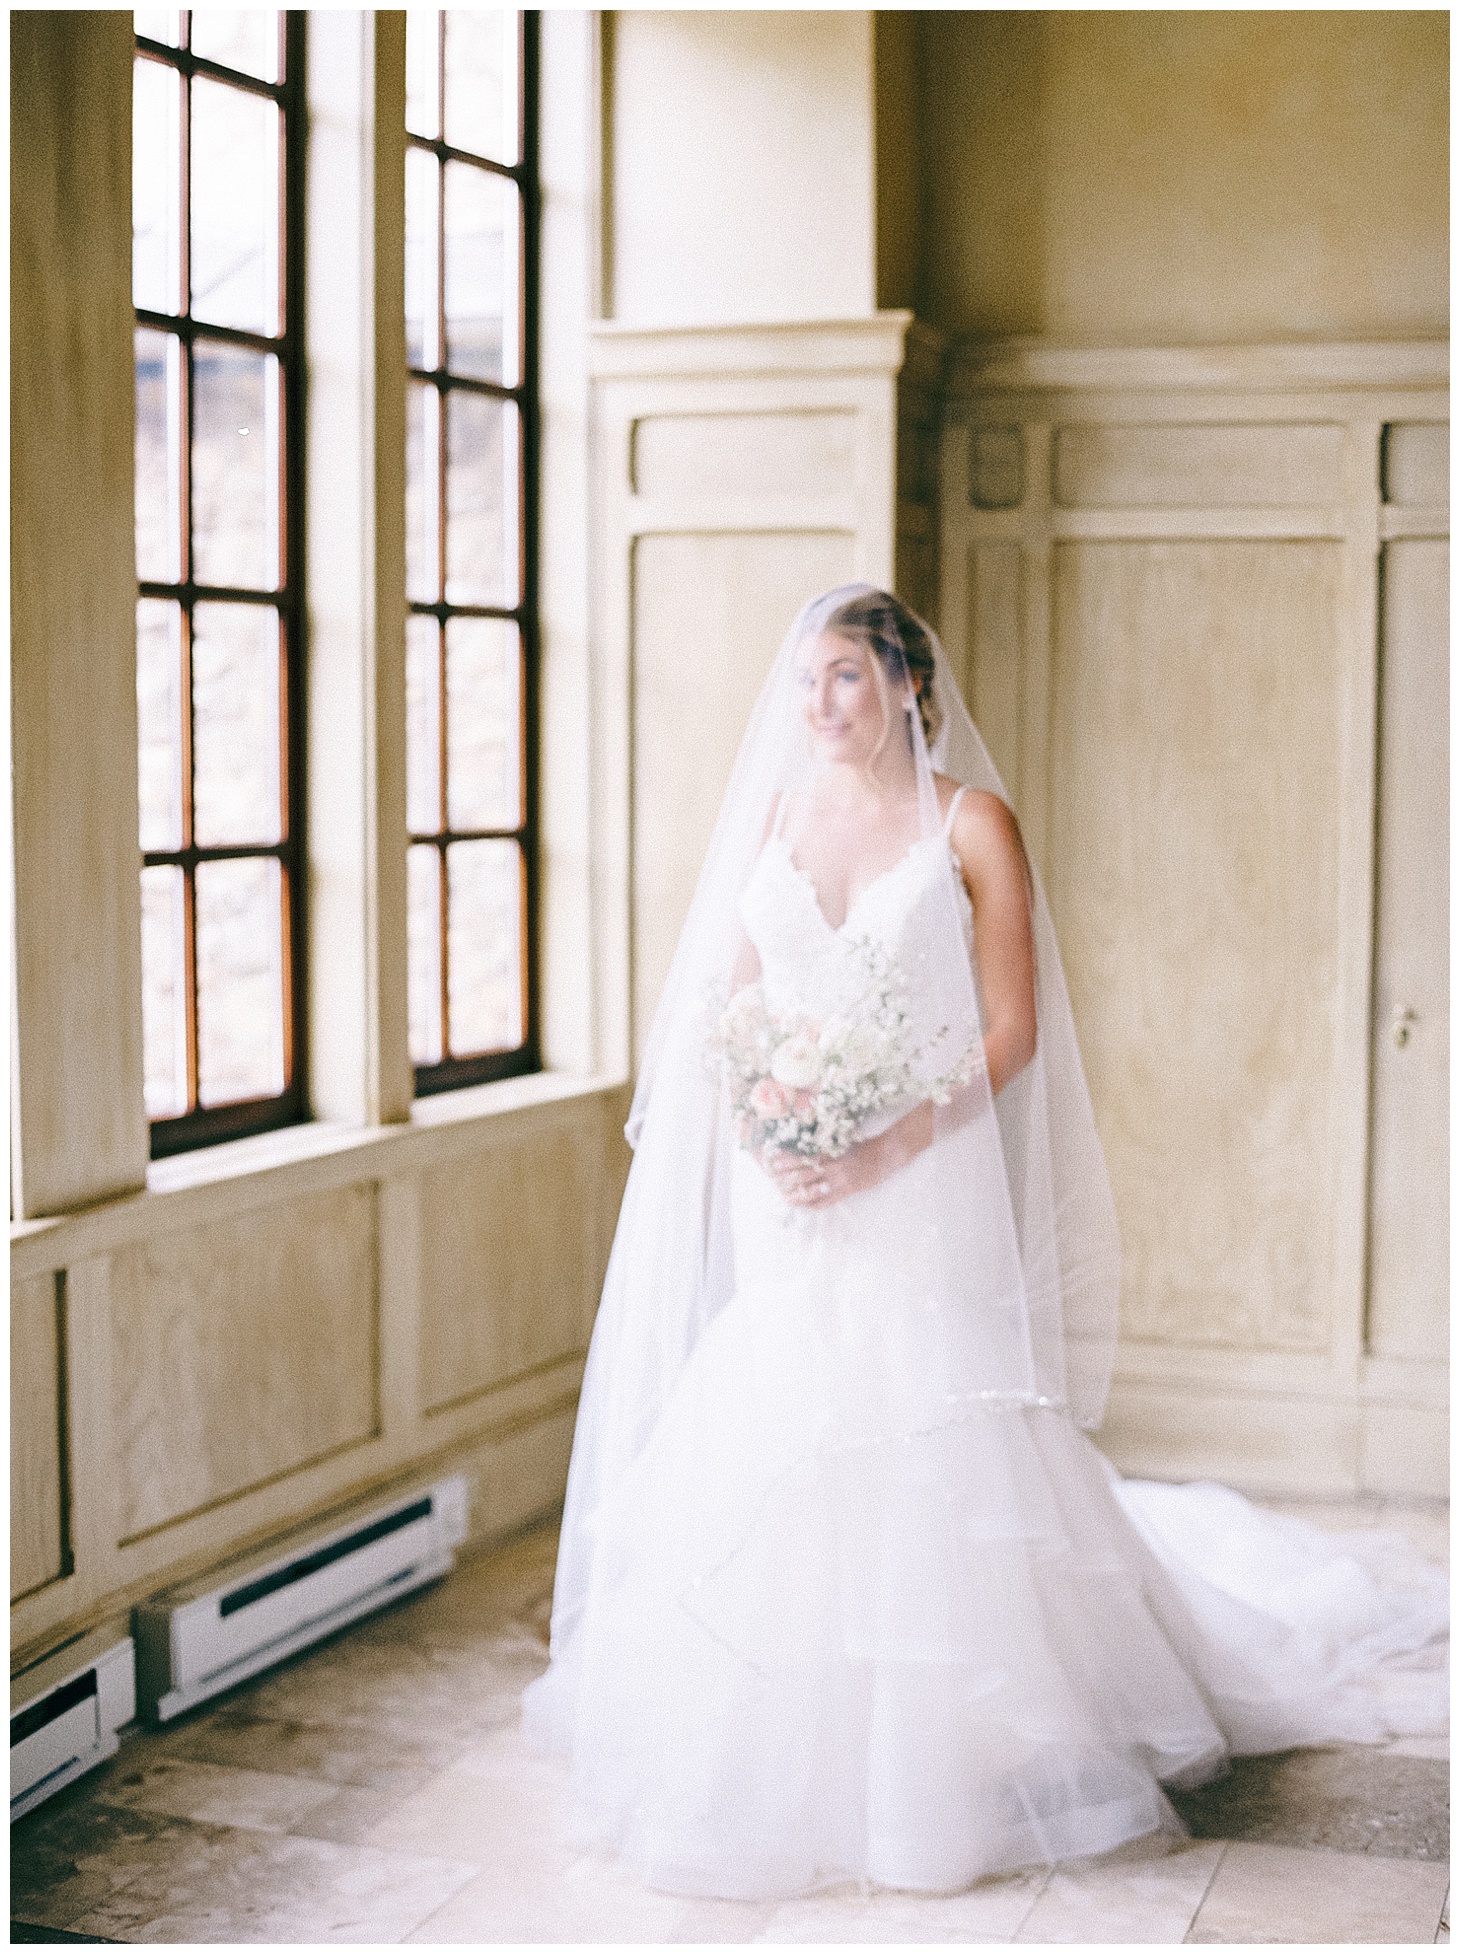 Dover Hall Bridal Portraits, Bridal Portraits, Film Photography, Fine Art Photography, Nikki Santerre